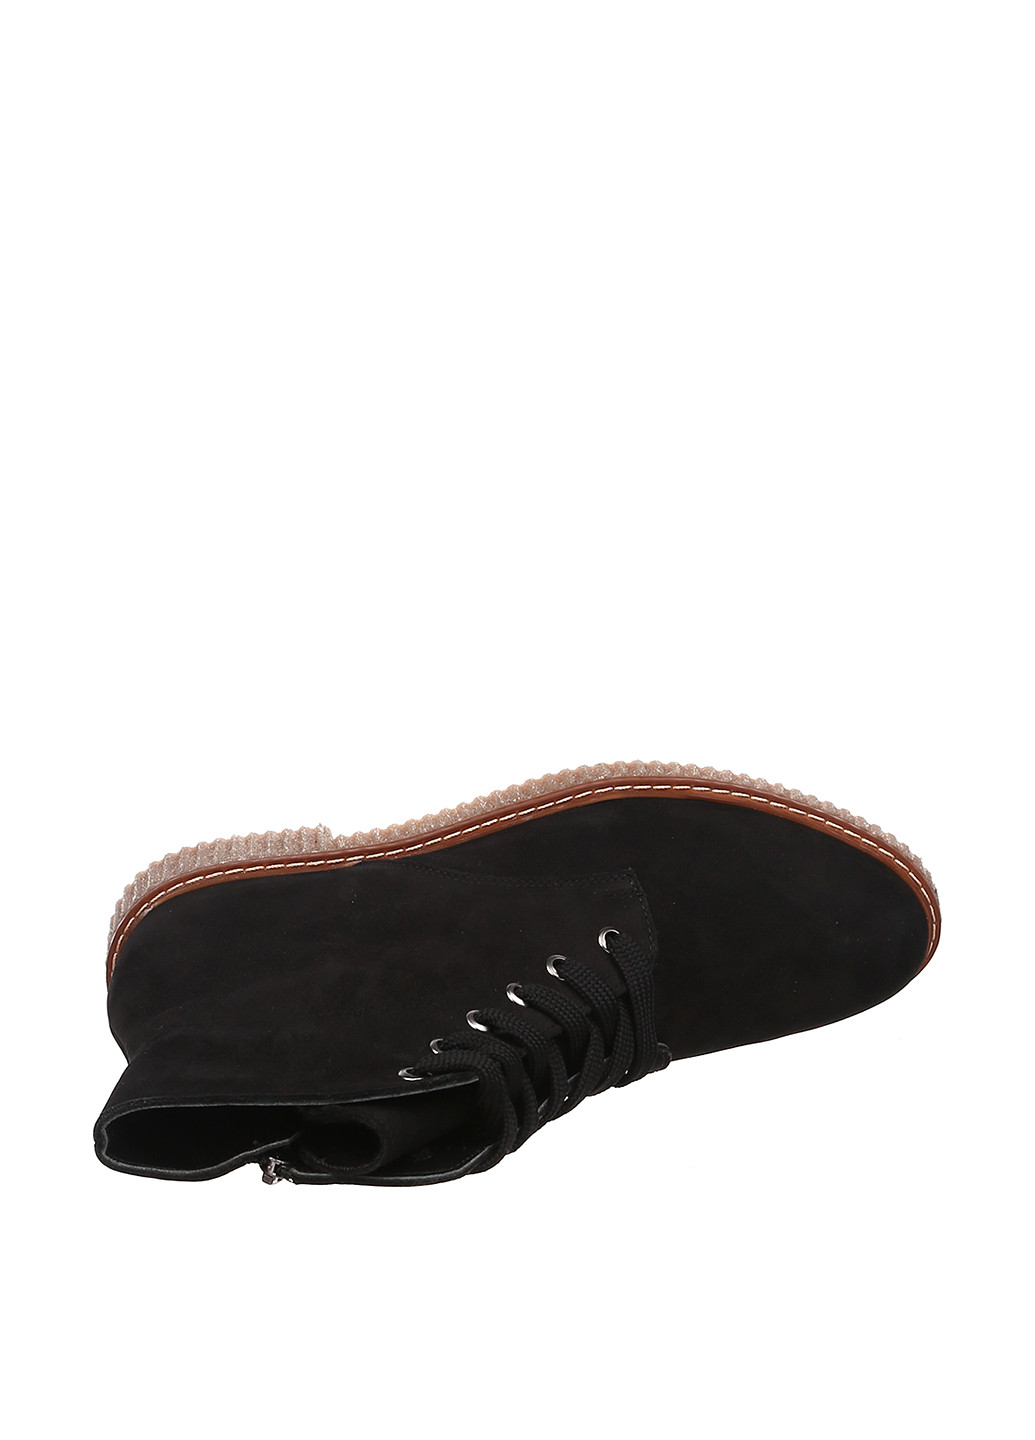 Осенние ботинки Alvito со шнуровкой